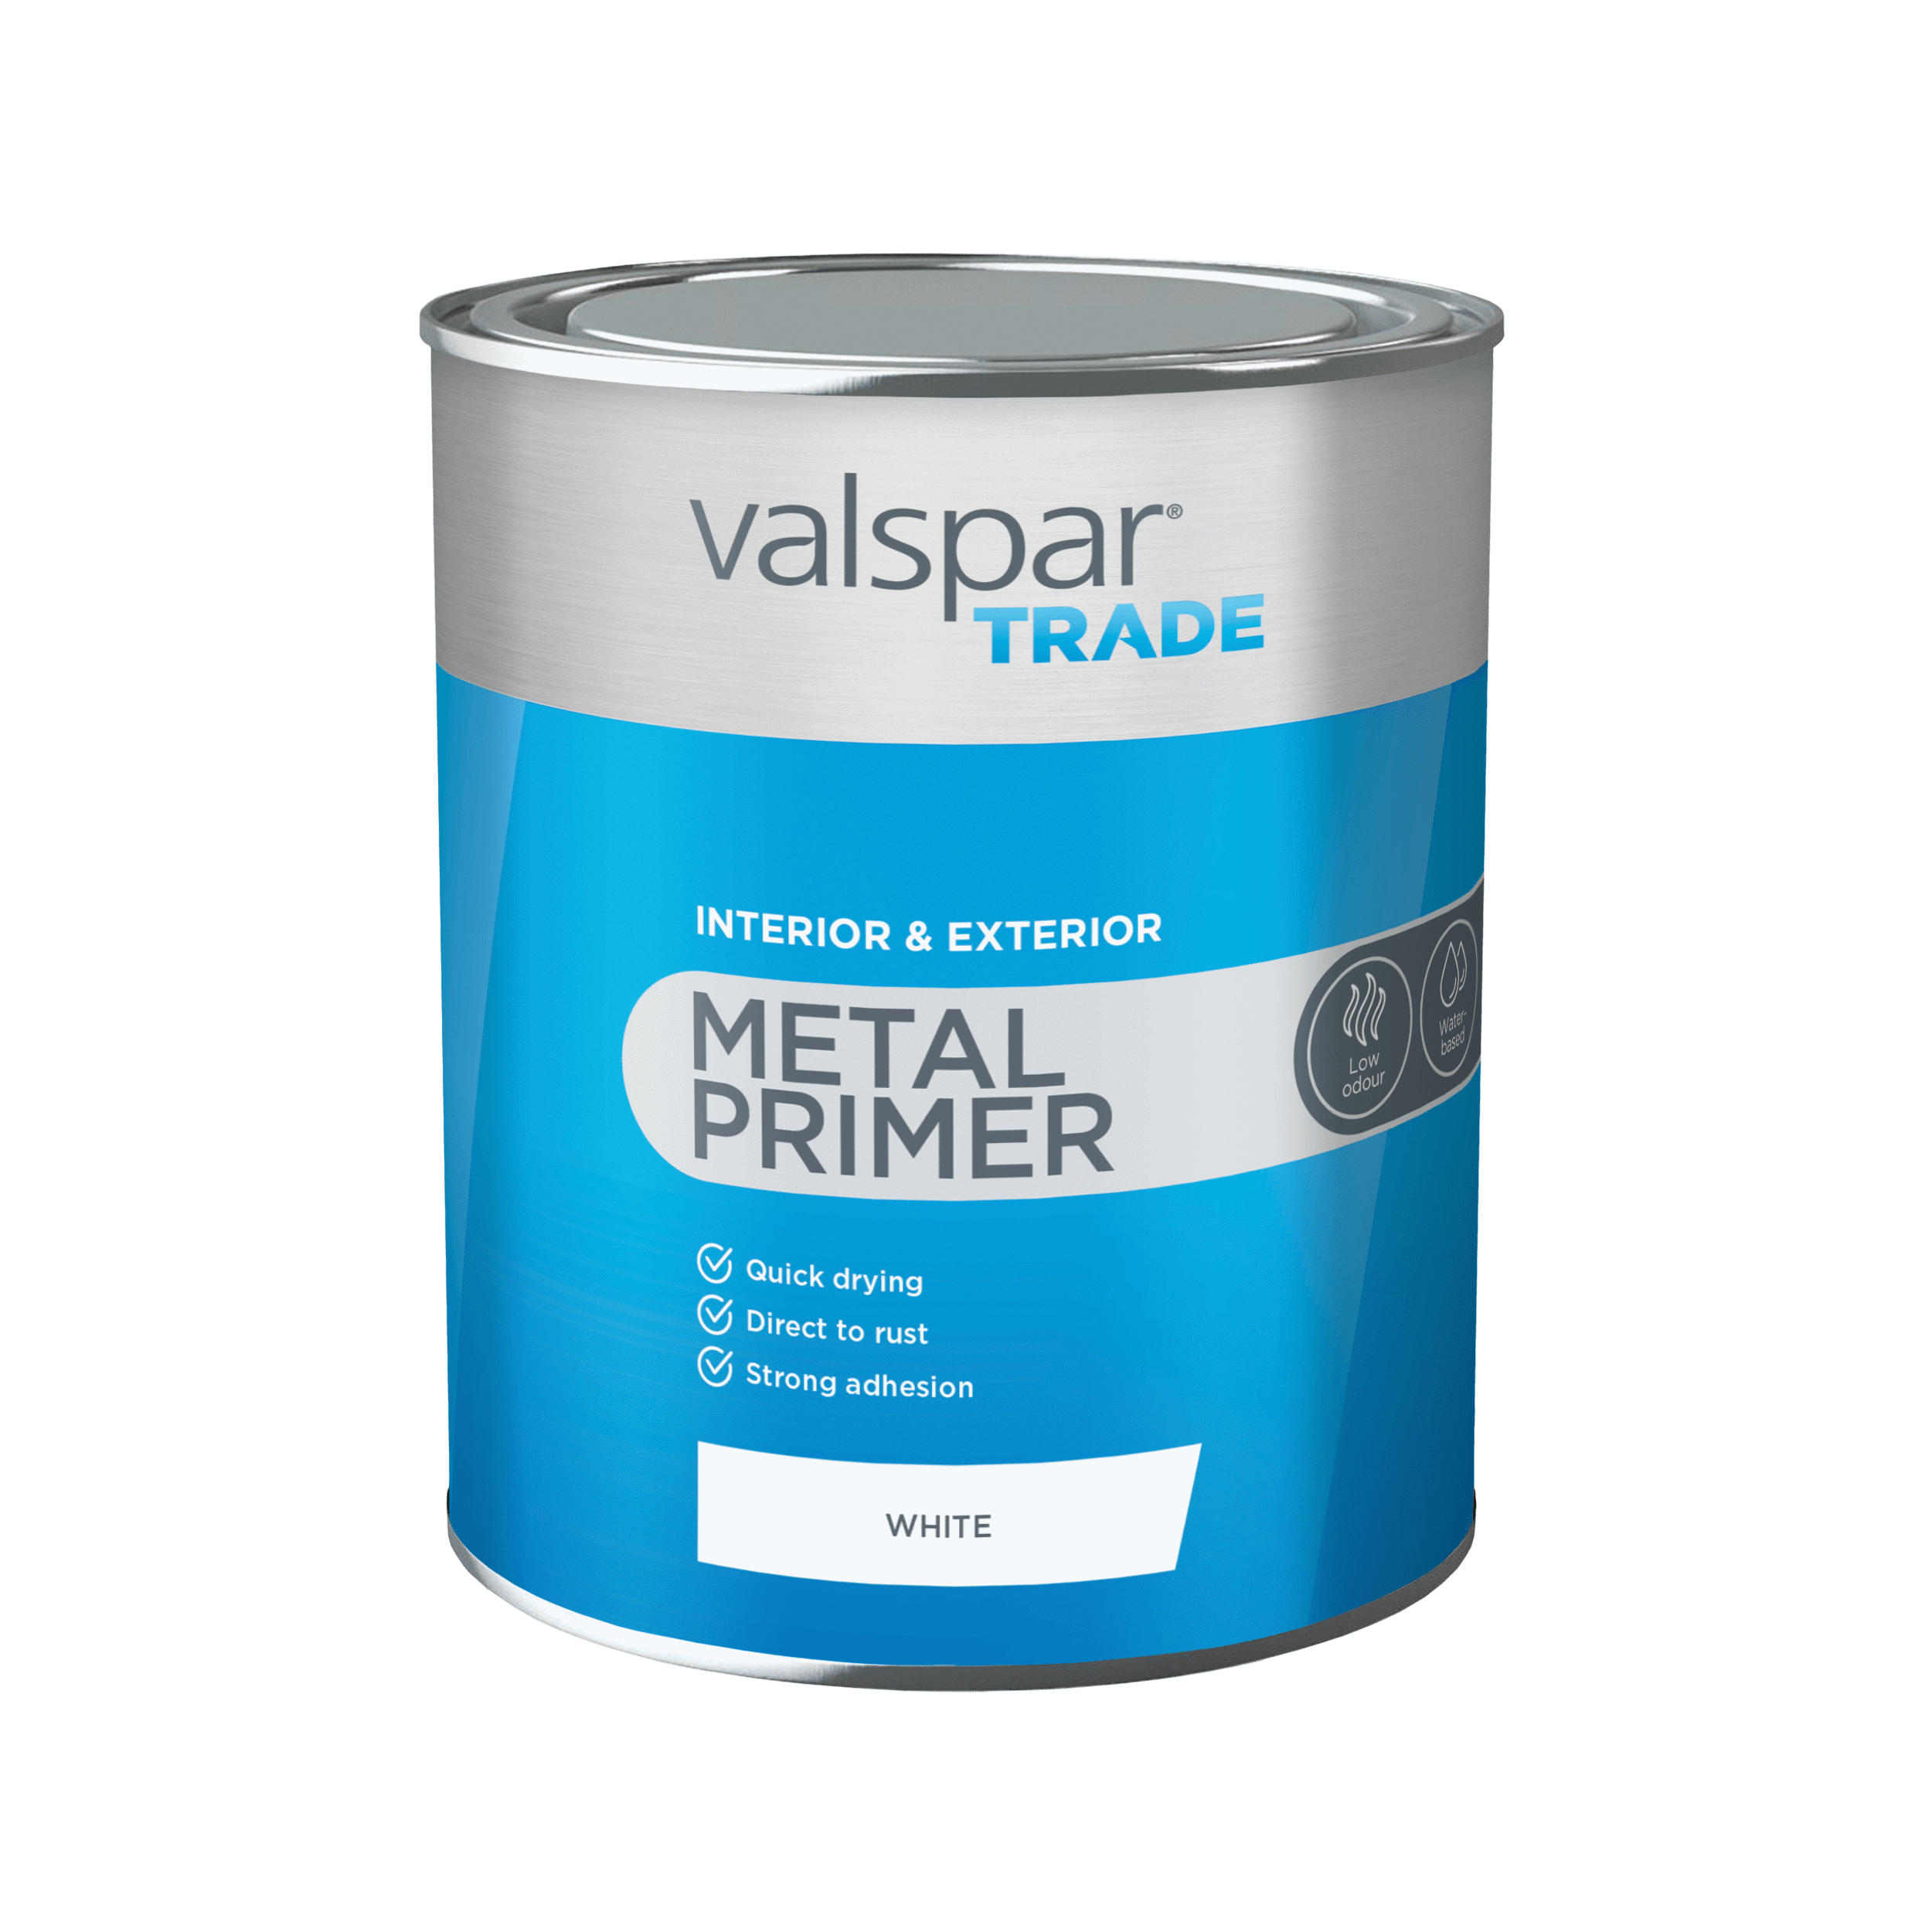 Valspar® Trade Metal Primer